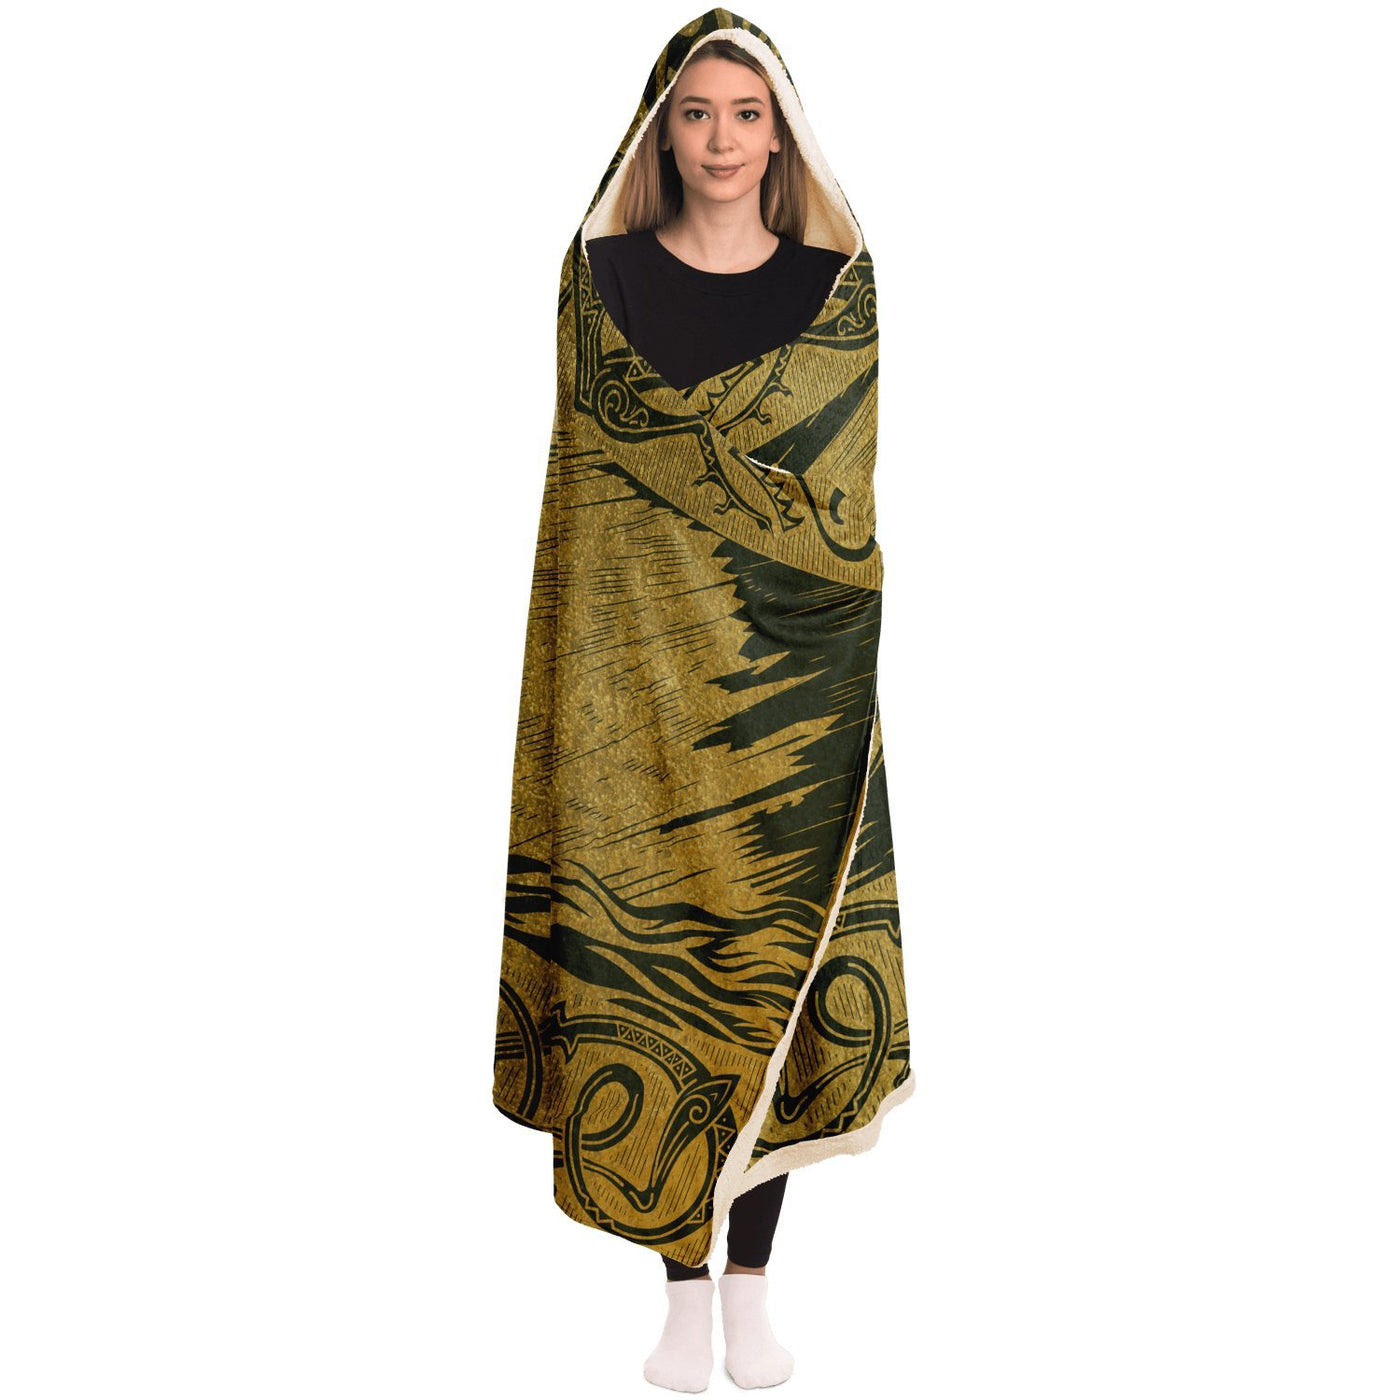 Dark Olive Green The Long Viking Voyage | Hooded Blanket